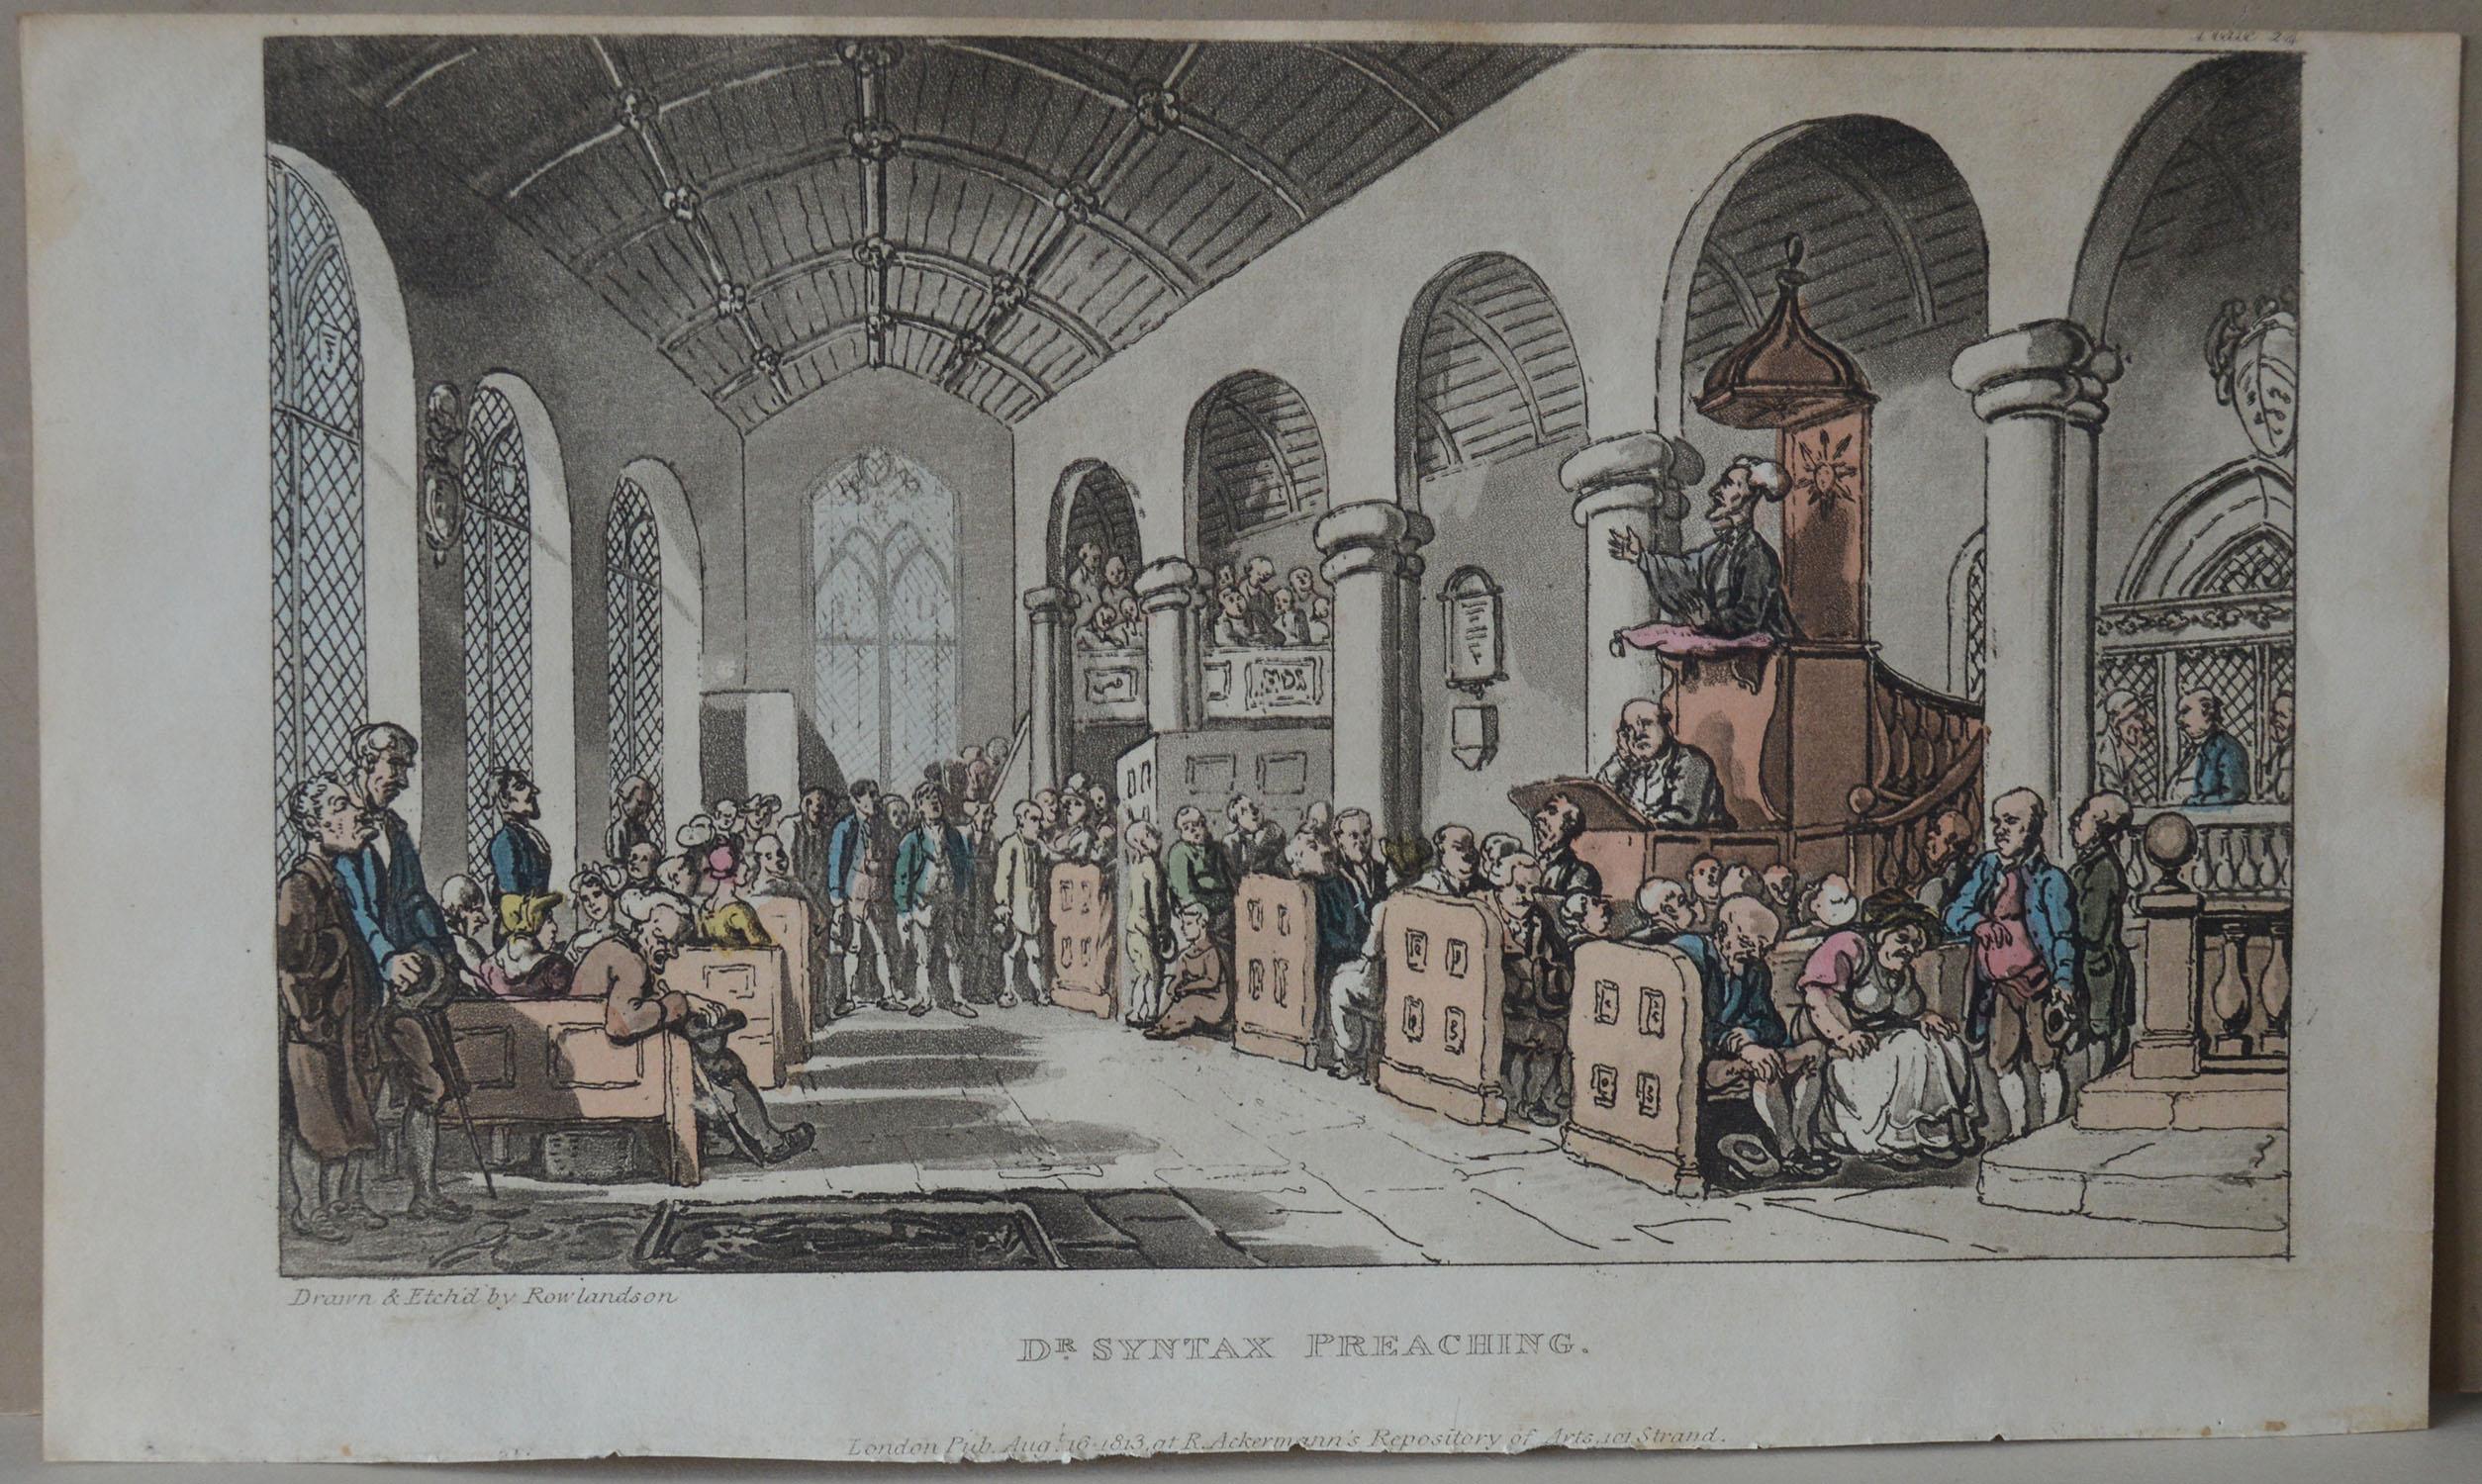 Georgian Original Antique Print after Thomas Rowlandson, 1813 For Sale